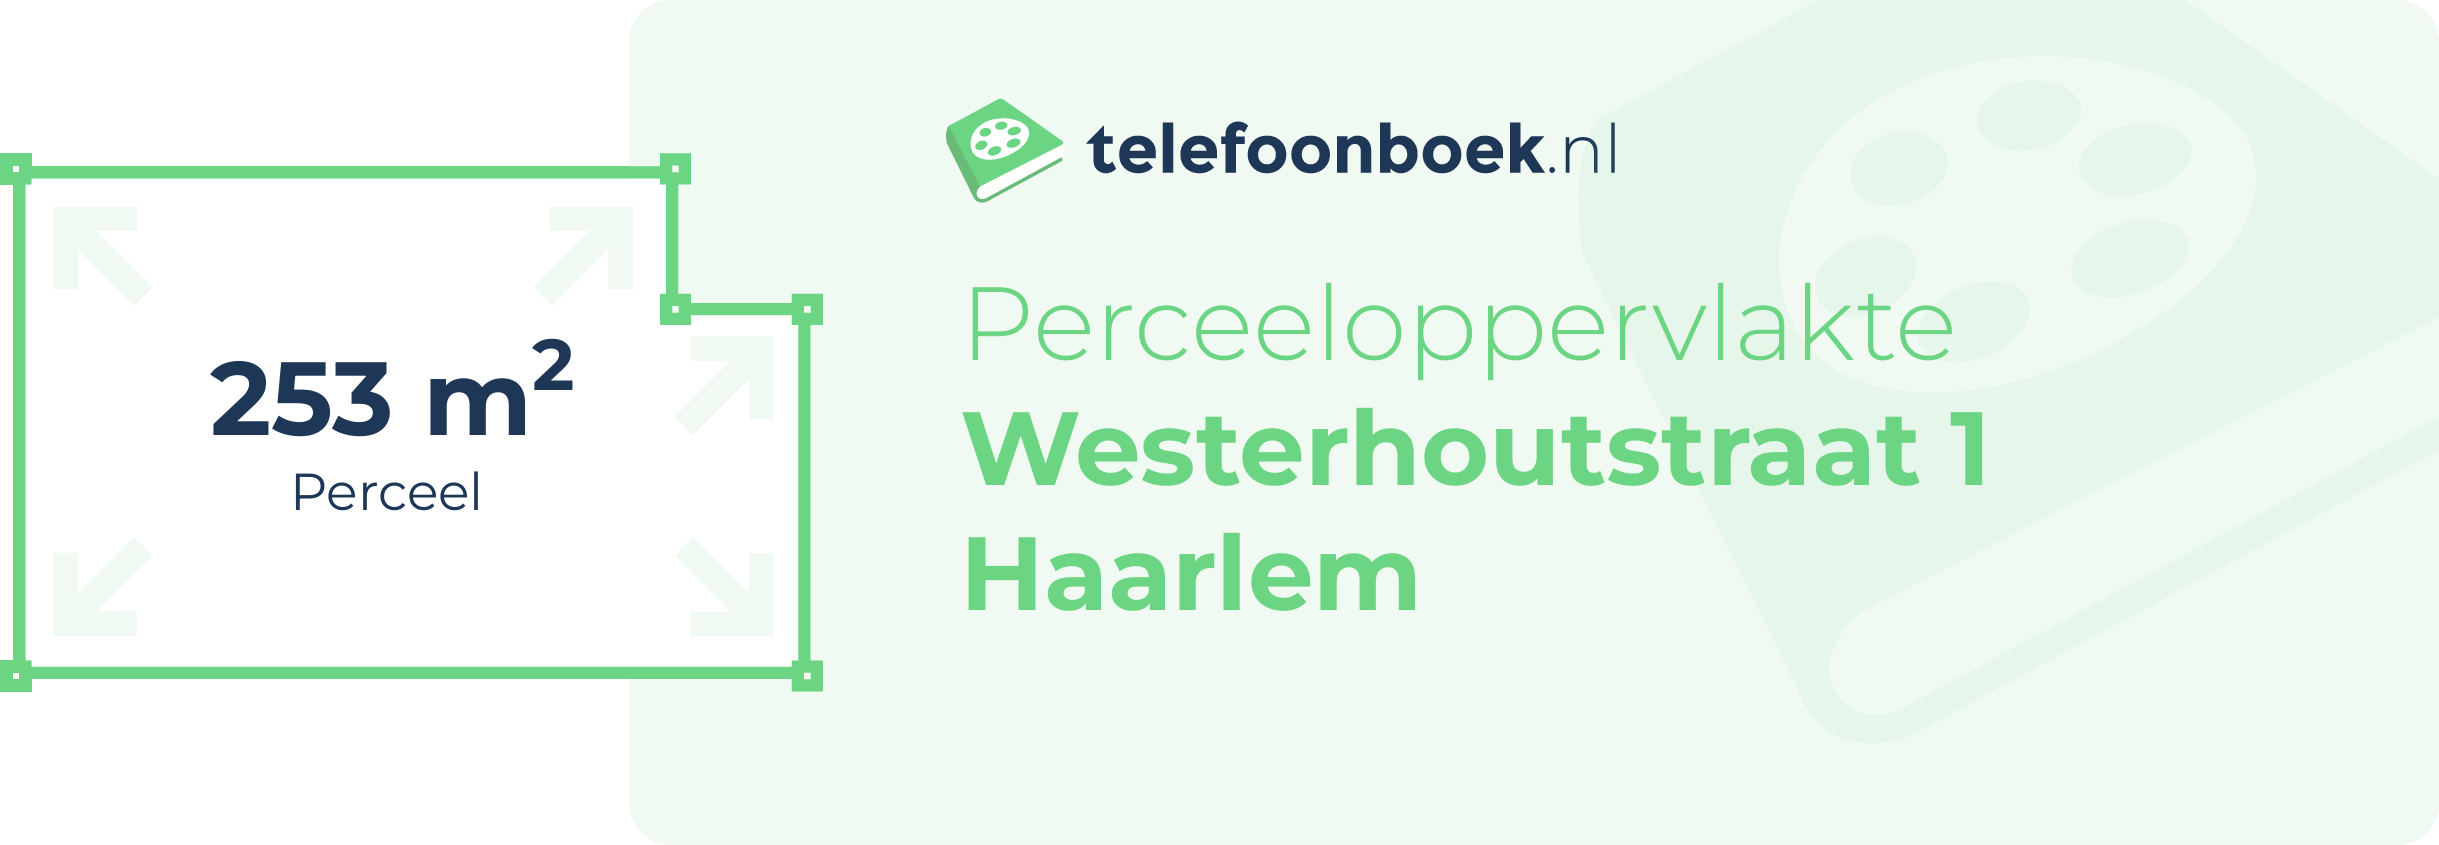 Perceeloppervlakte Westerhoutstraat 1 Haarlem